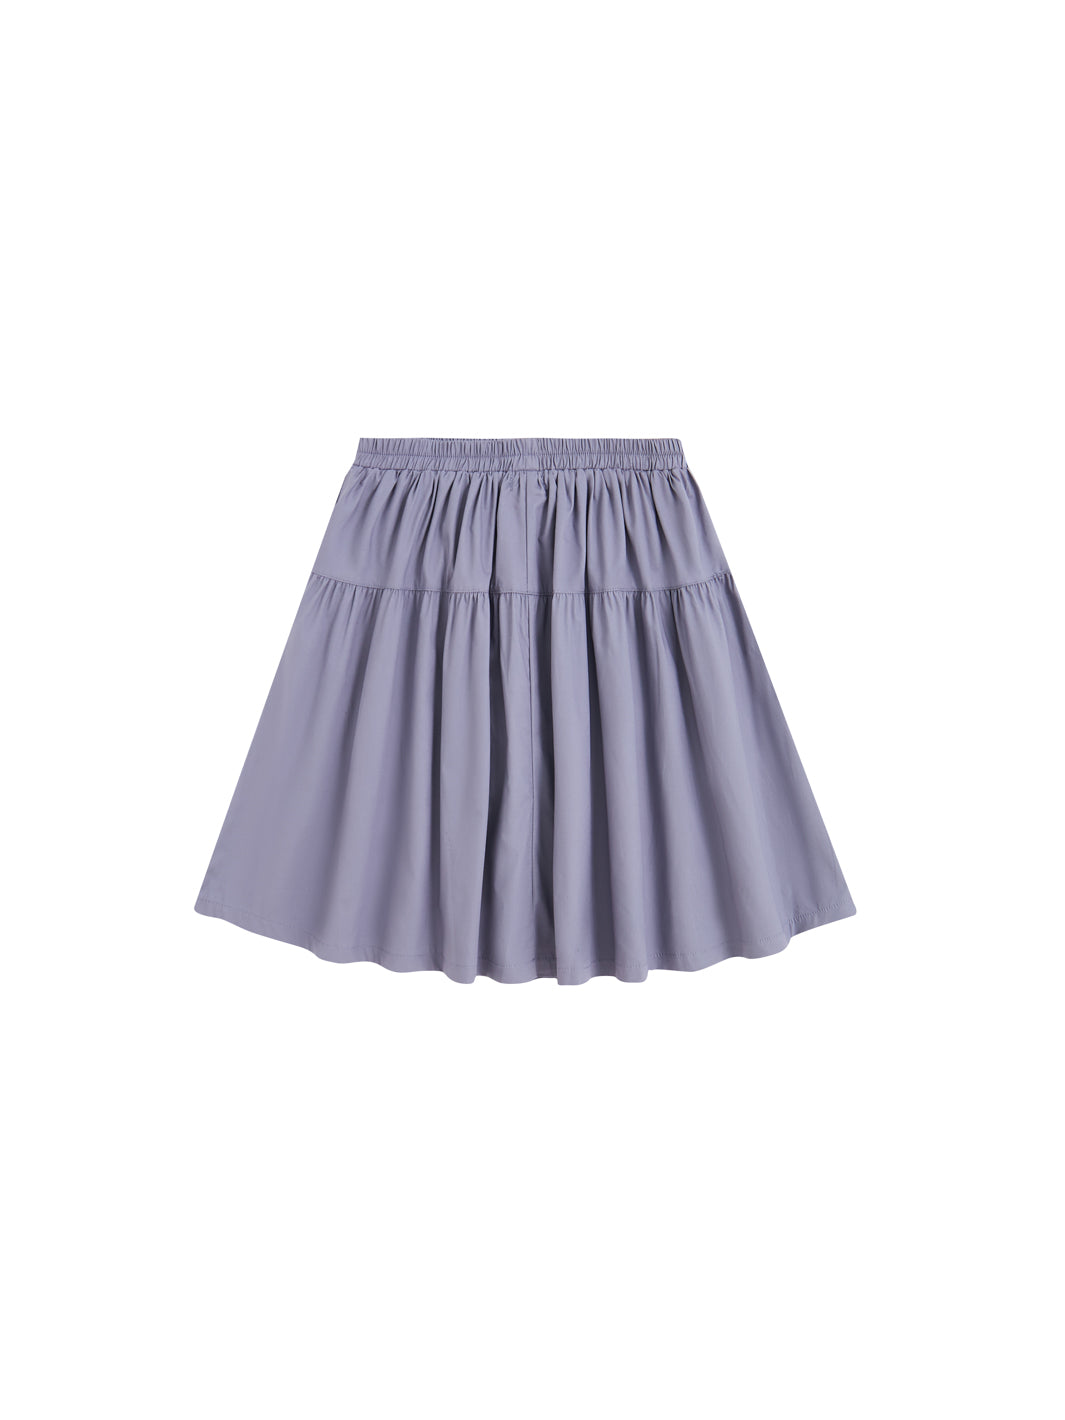 Solid Gathered Skirt - Grey